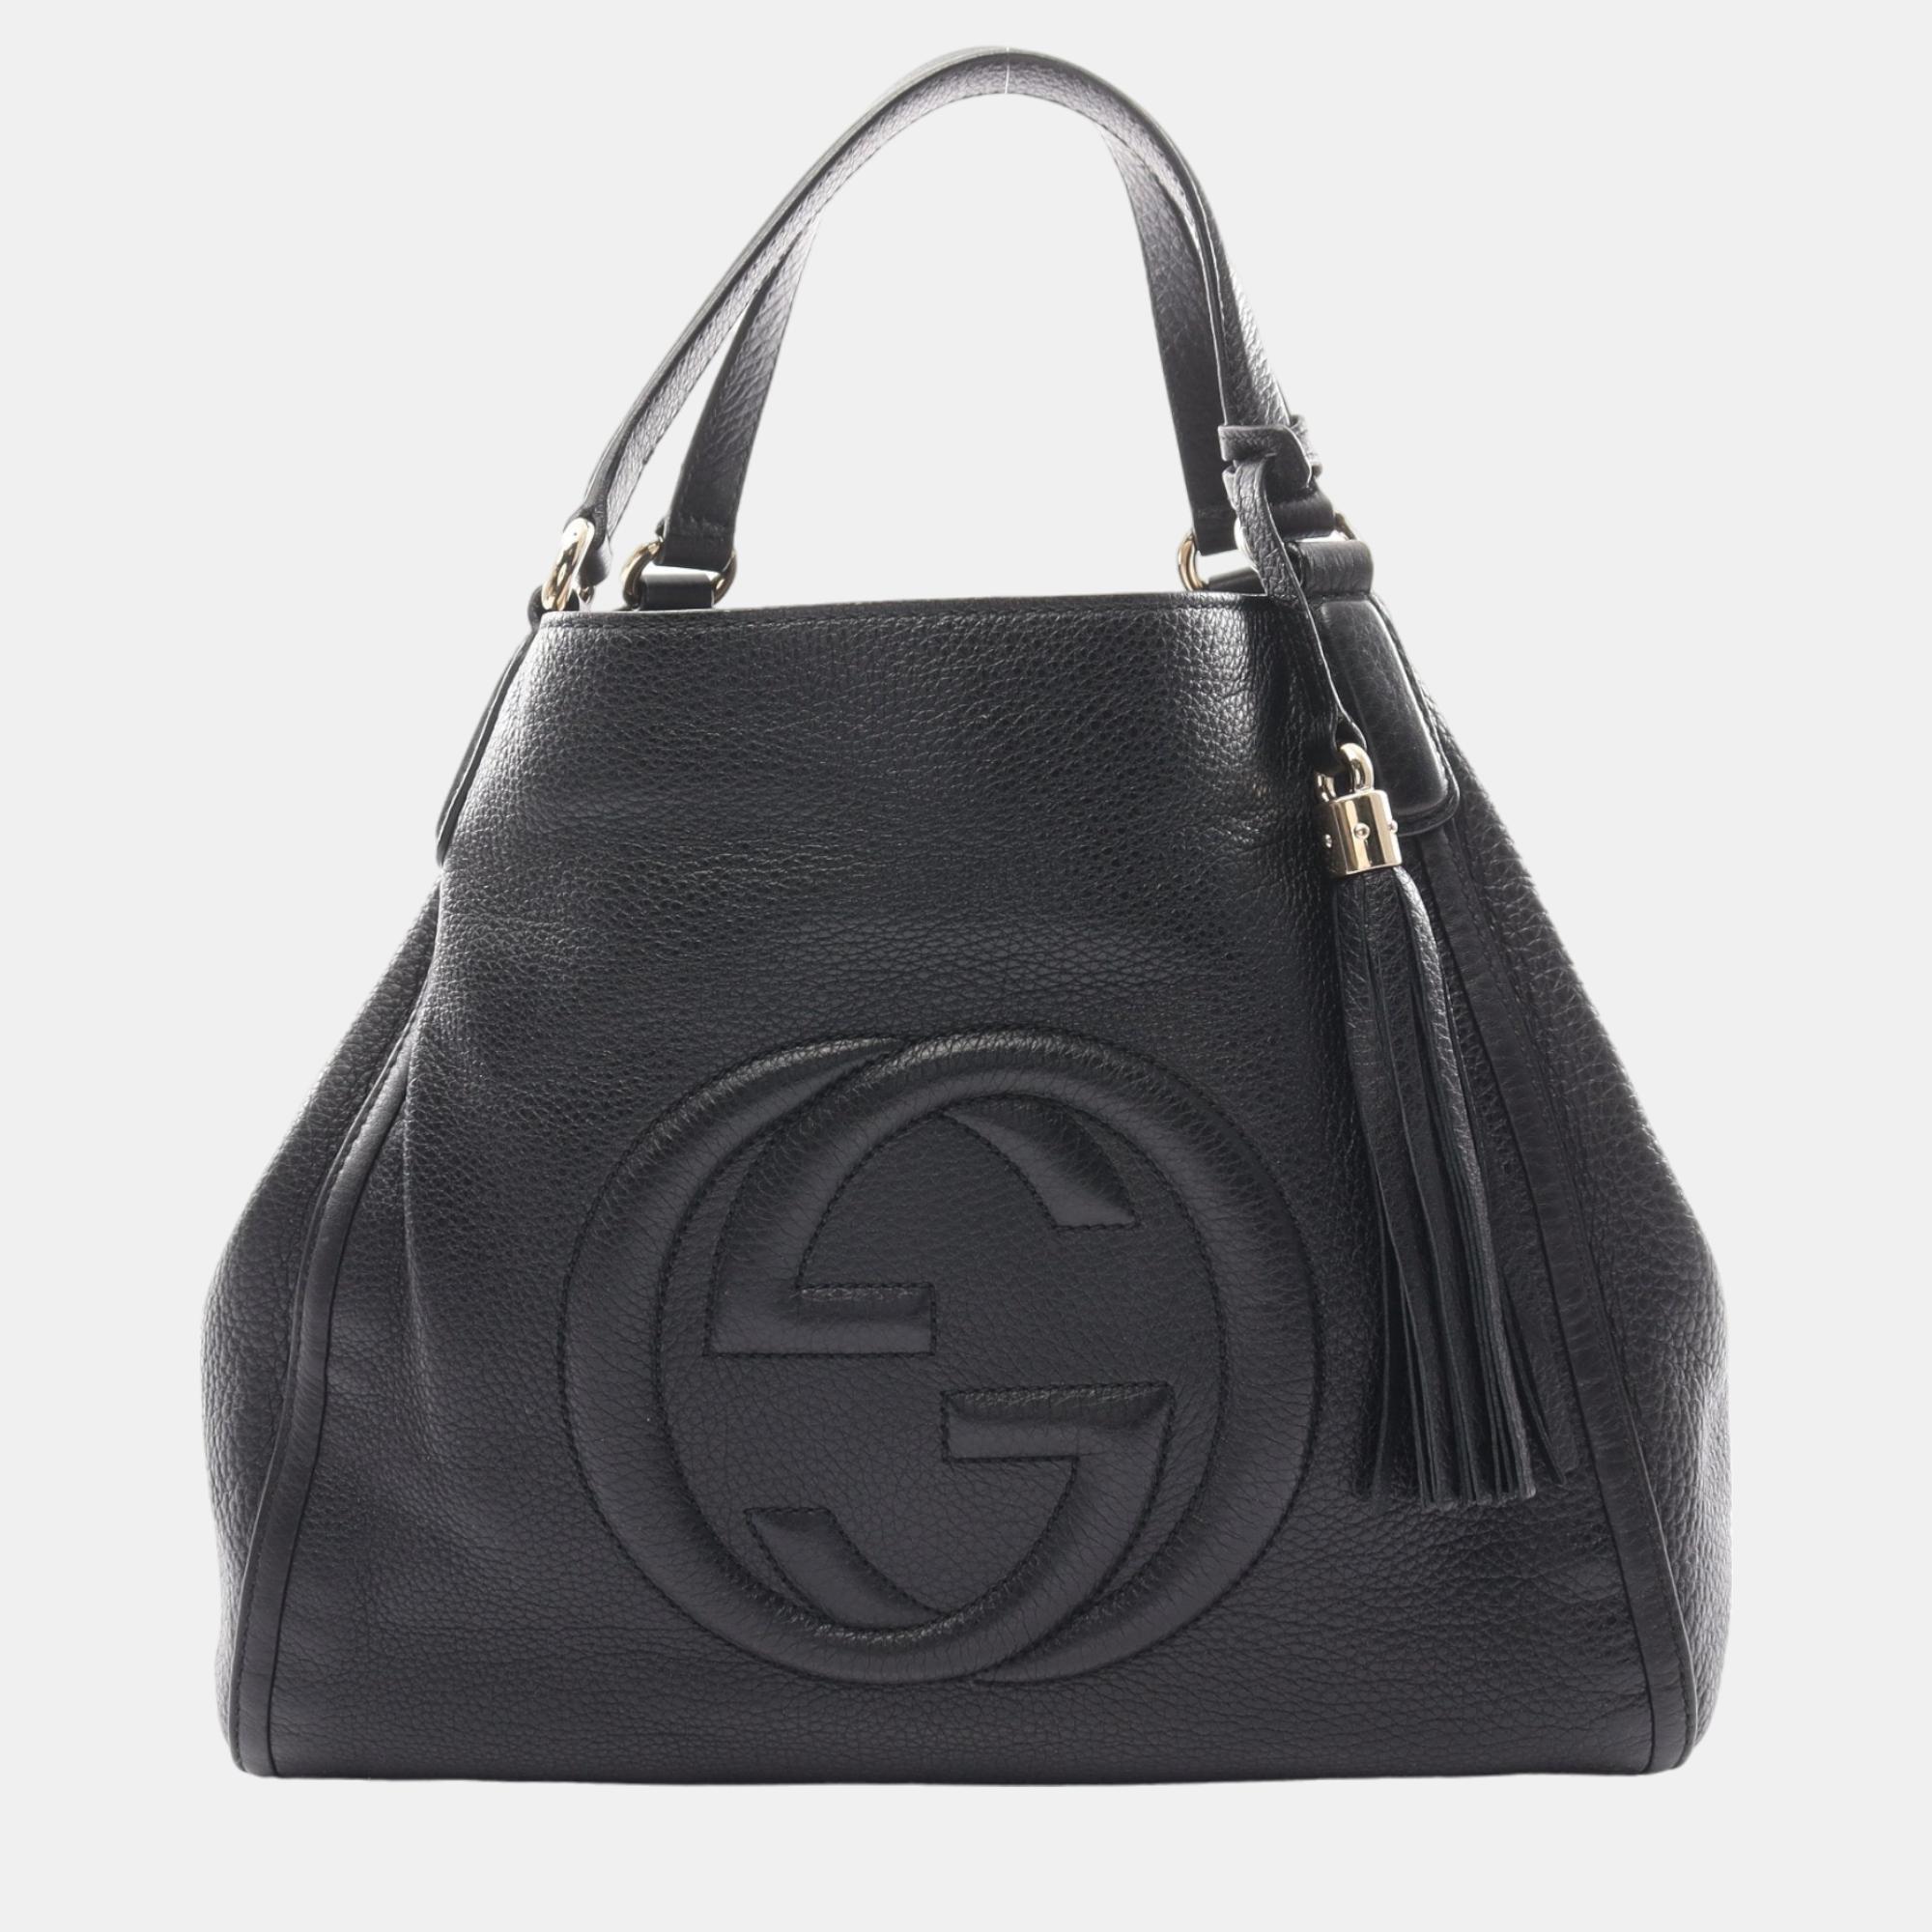 Gucci soho cellarius interlocking g handbag tote bag leather black